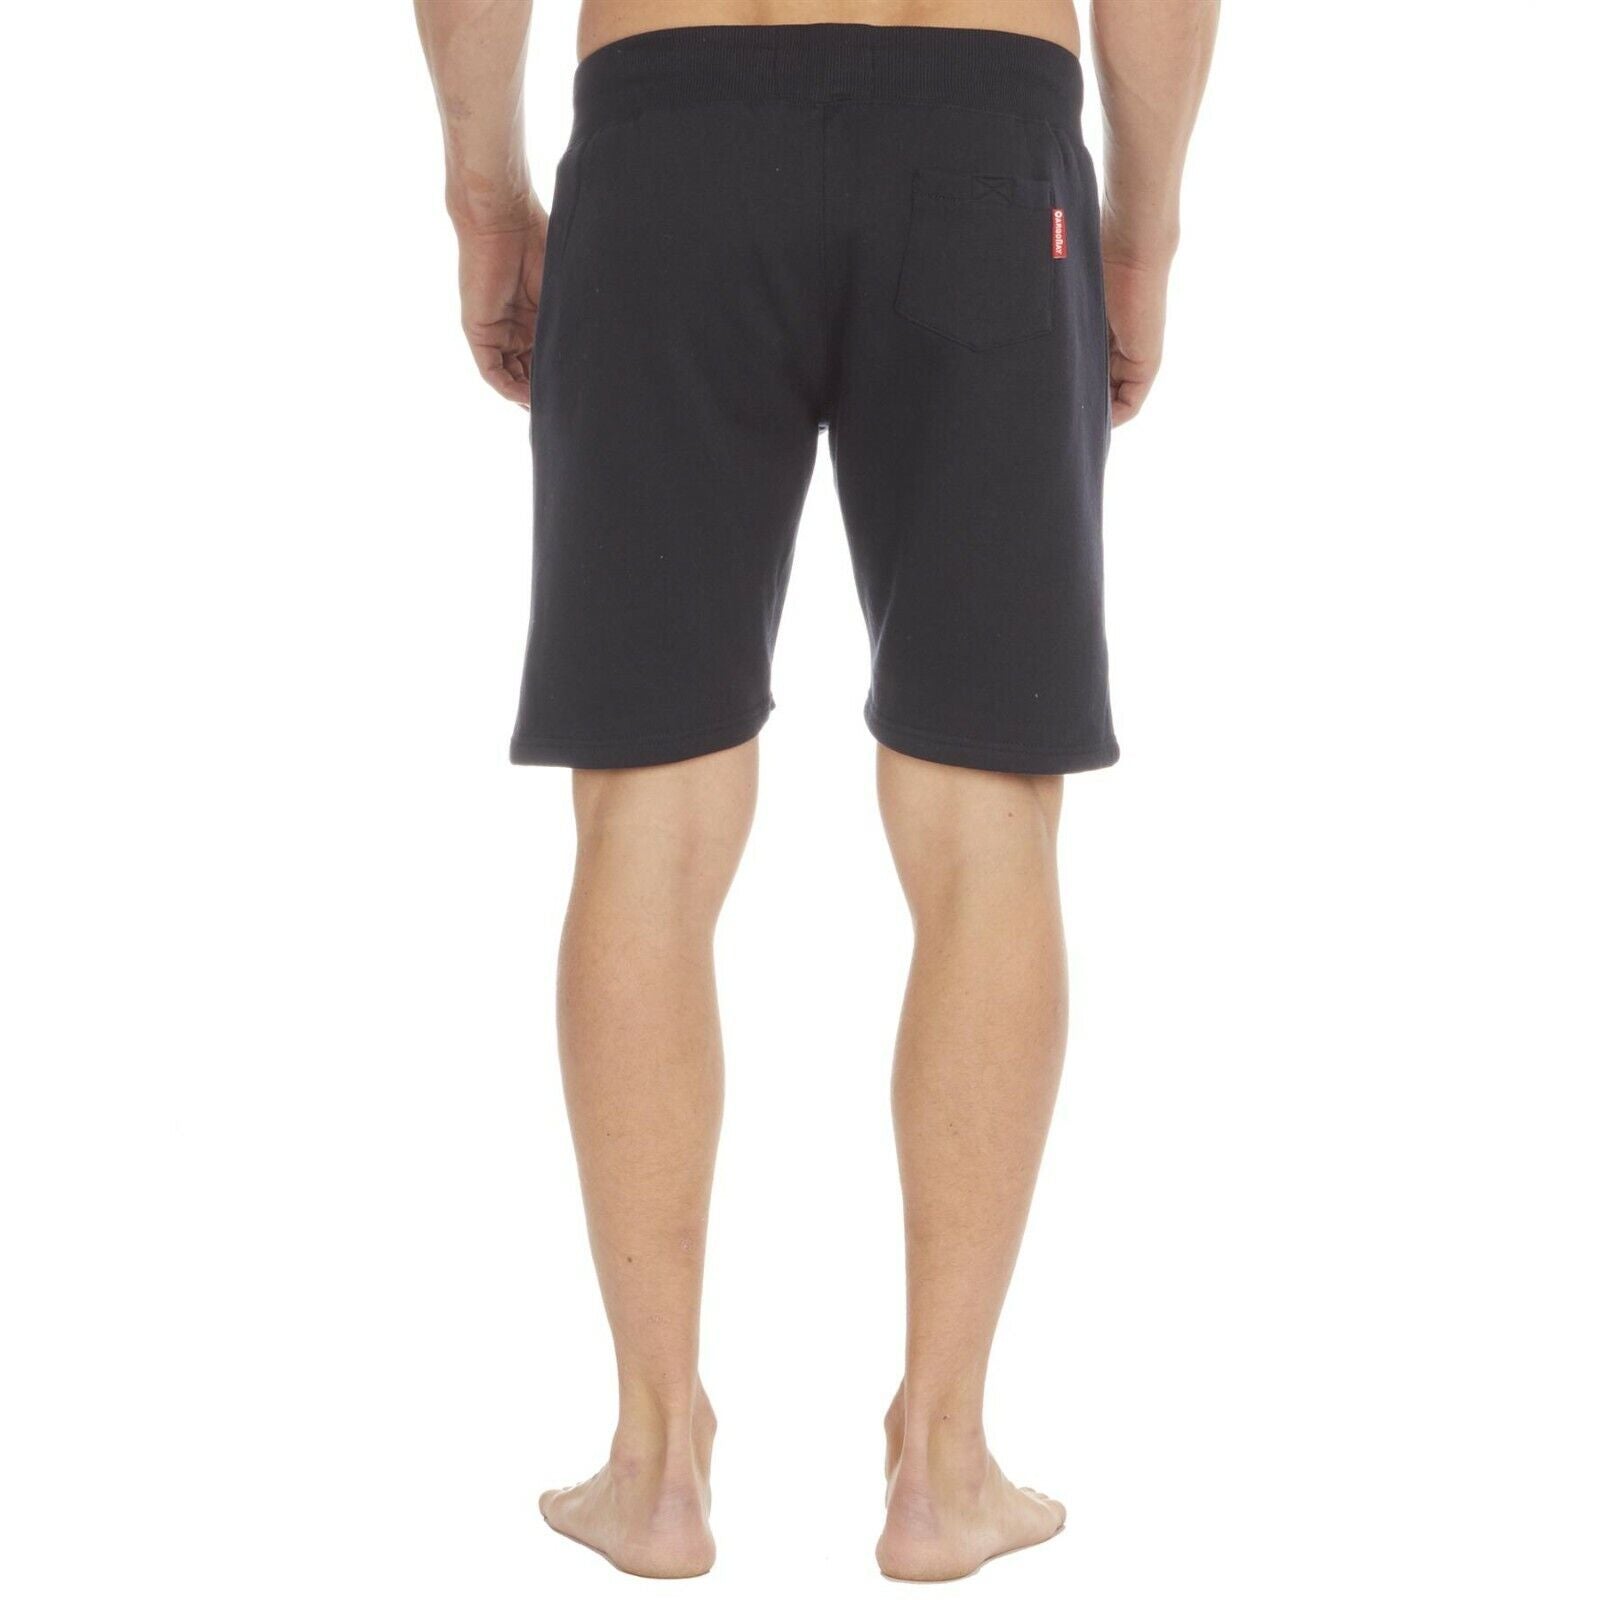 Mens Joggers & Shorts Casual Jogging Bottoms Sweatpants Gym Shorts Casual S-2XL